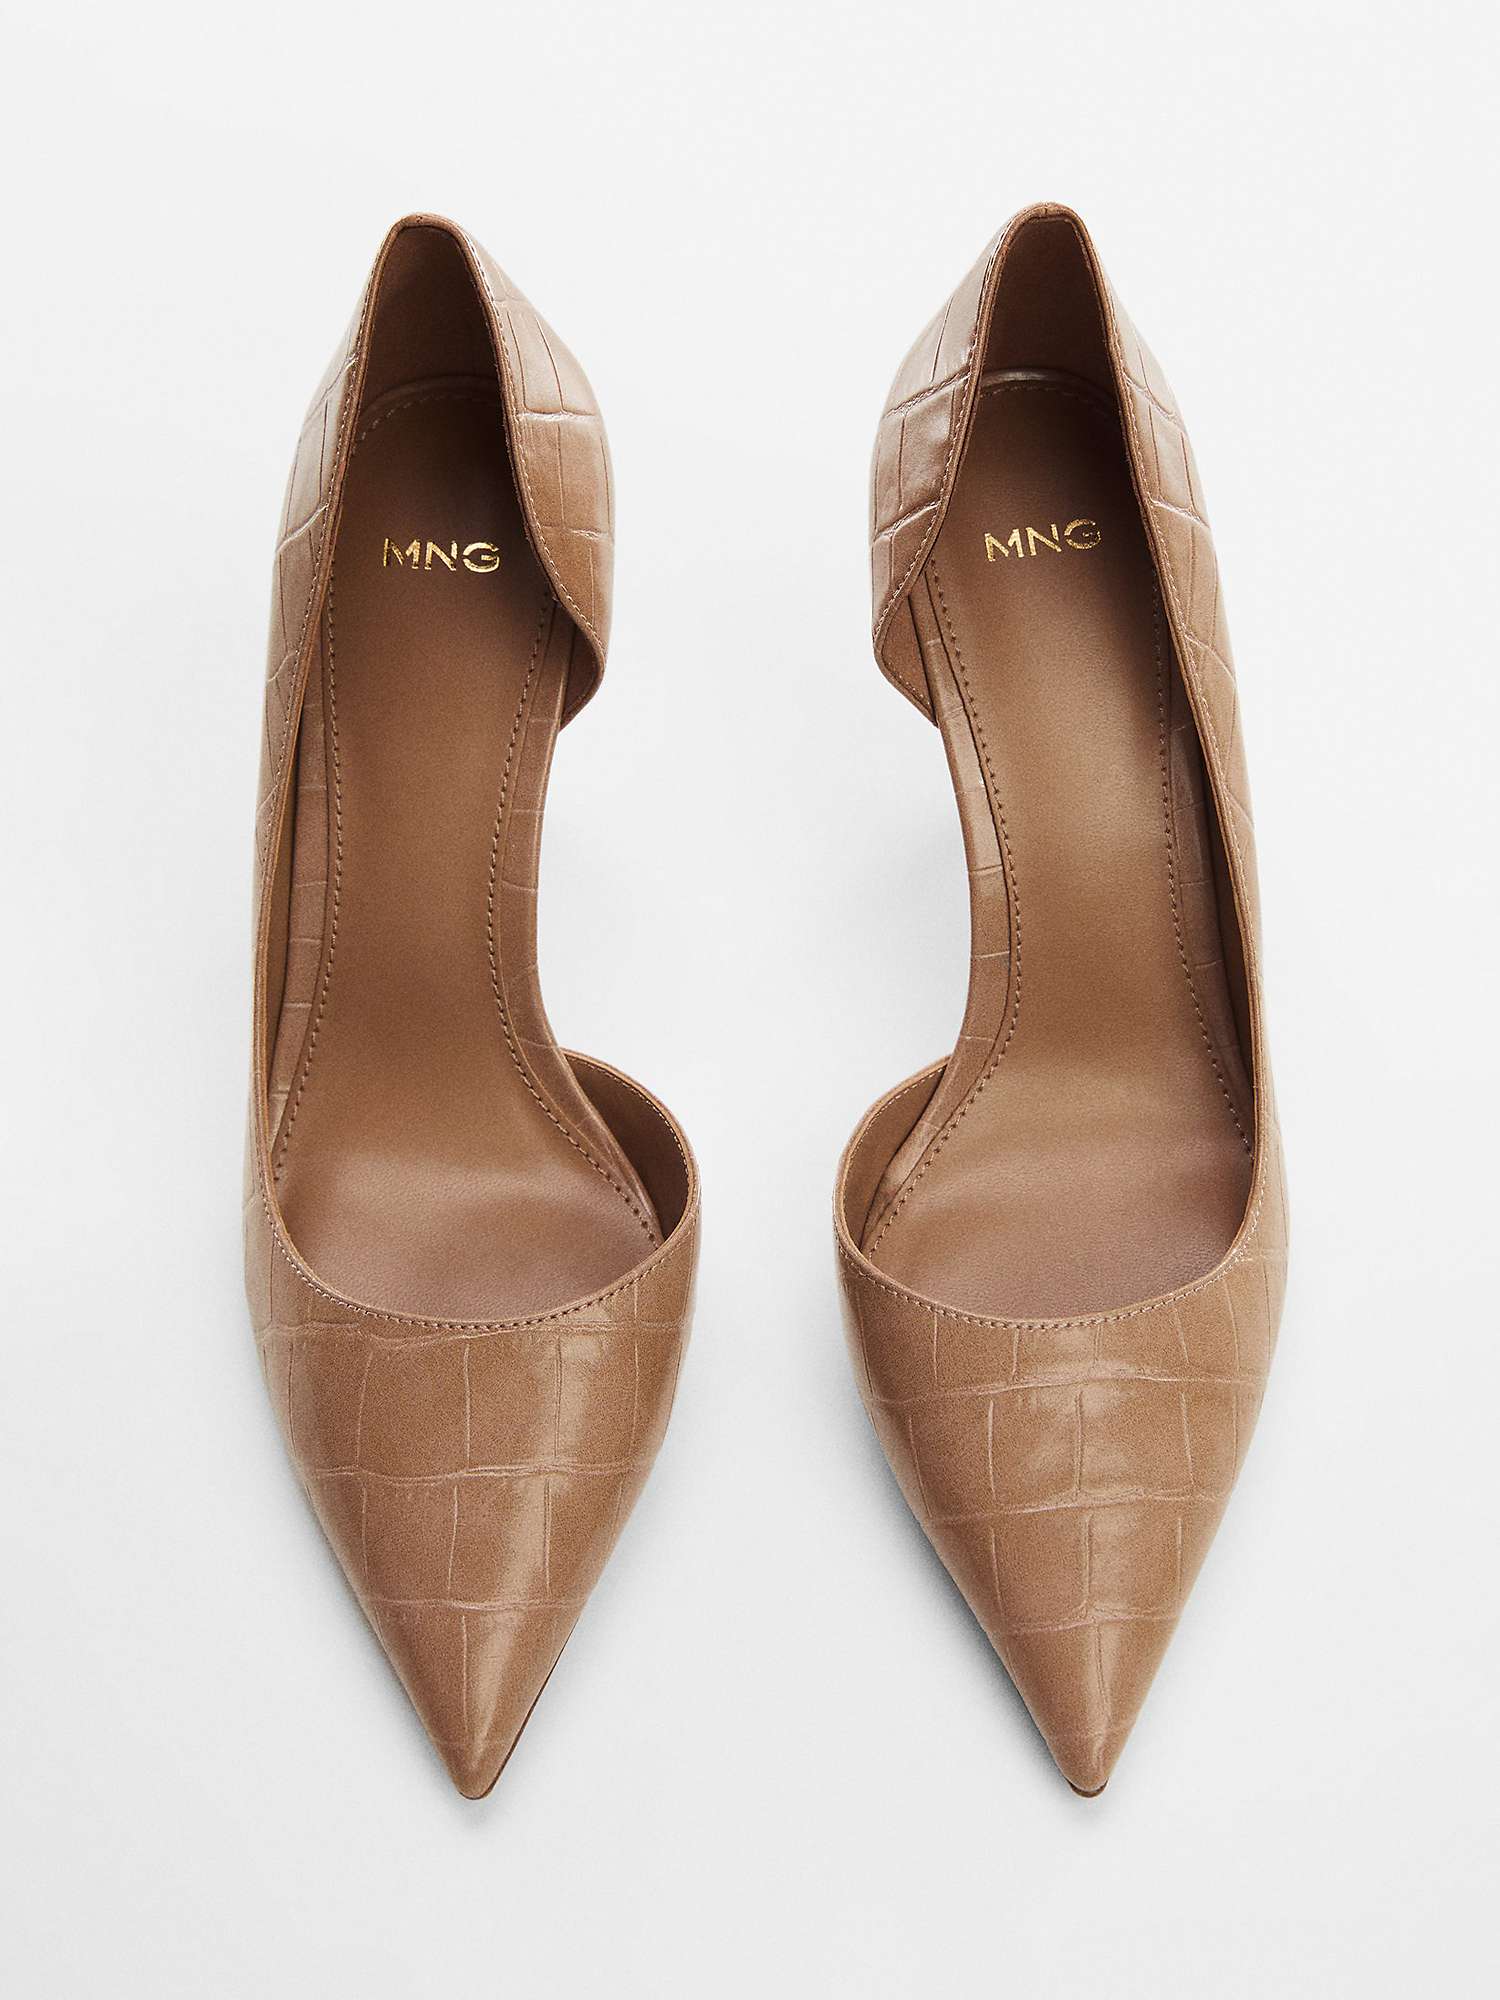 Buy Mango Audrey Asymmetrical Court Shoes, Pastel Pink Online at johnlewis.com